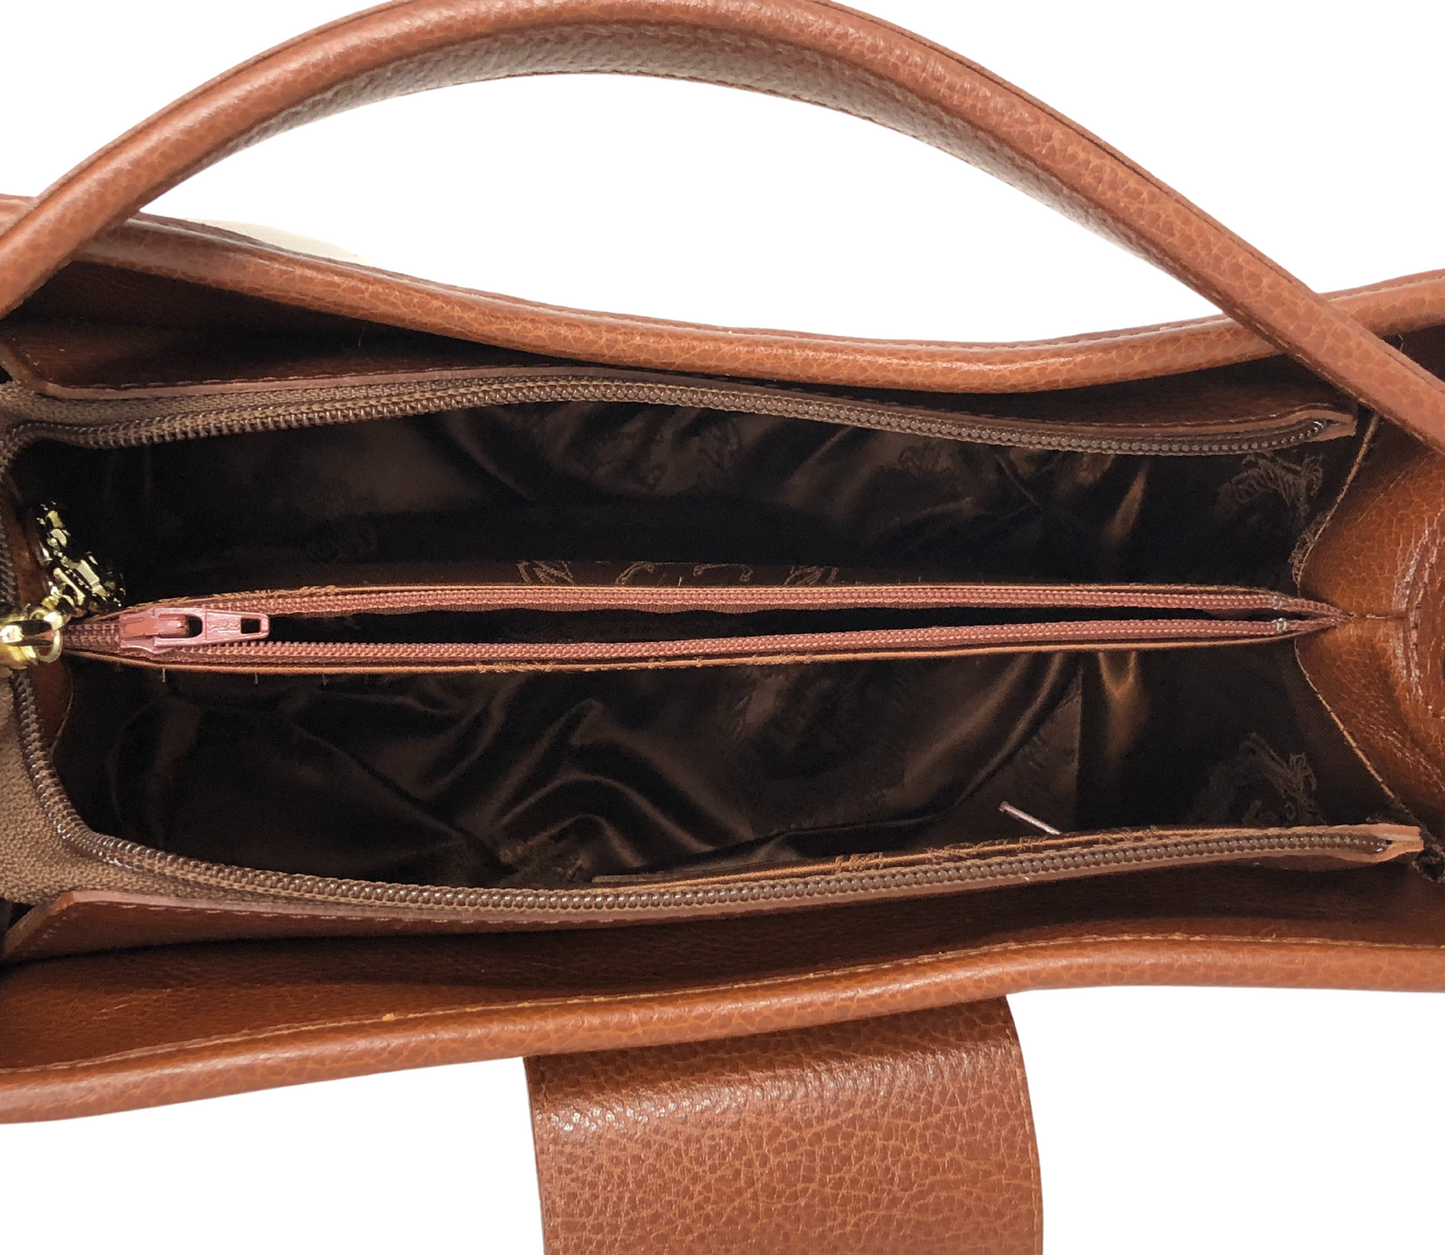 Cavalinho Honor Handbag - SaddleBrown - 18190429.15-Internal0157.34